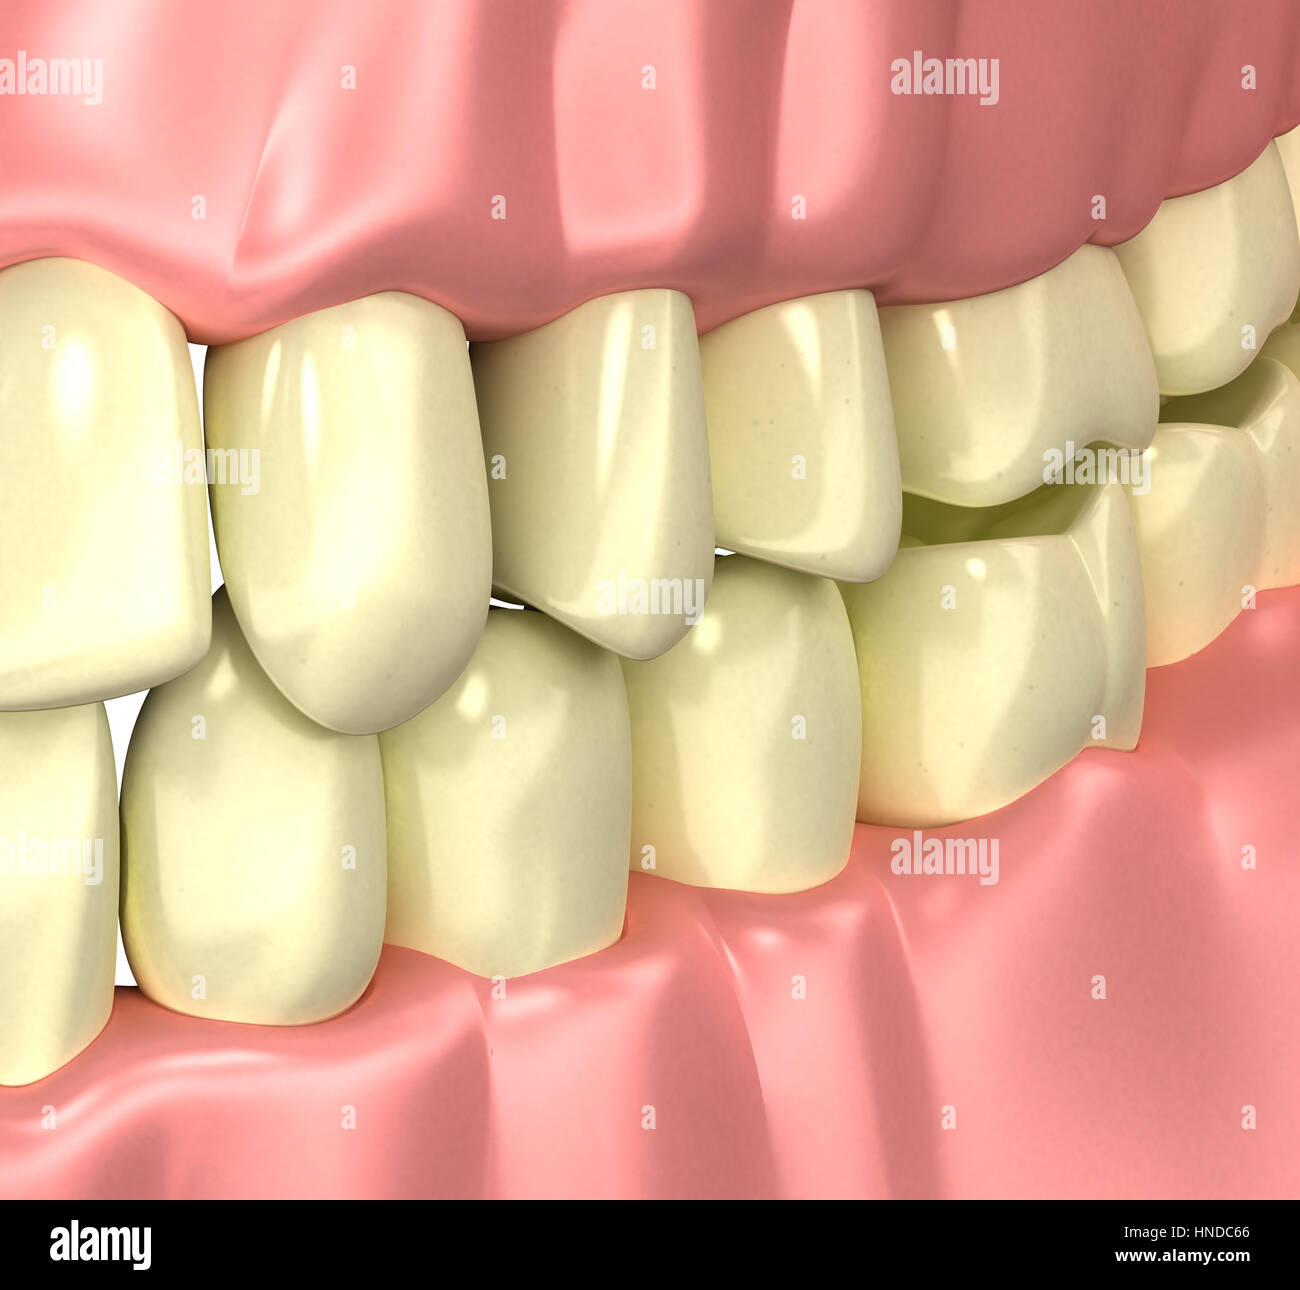 Smokers Yellow Bad Teeth concept - 3d illustration Stock Photo